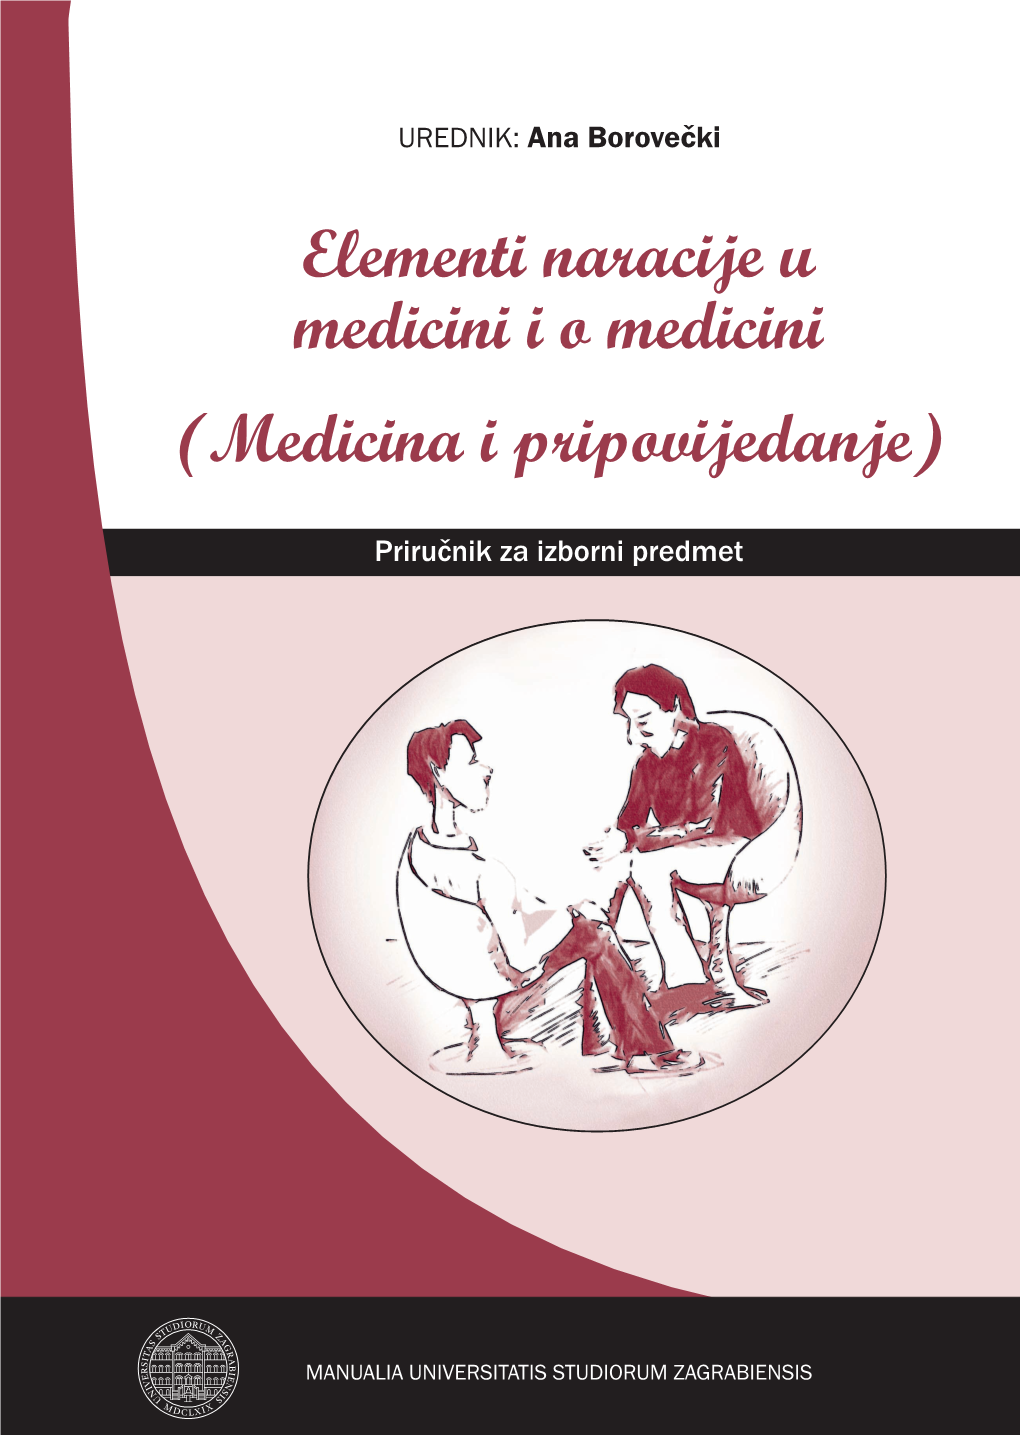 Elementi Naracije U Medicini I O Medicini Tisak.Indd 2 6.5.2020